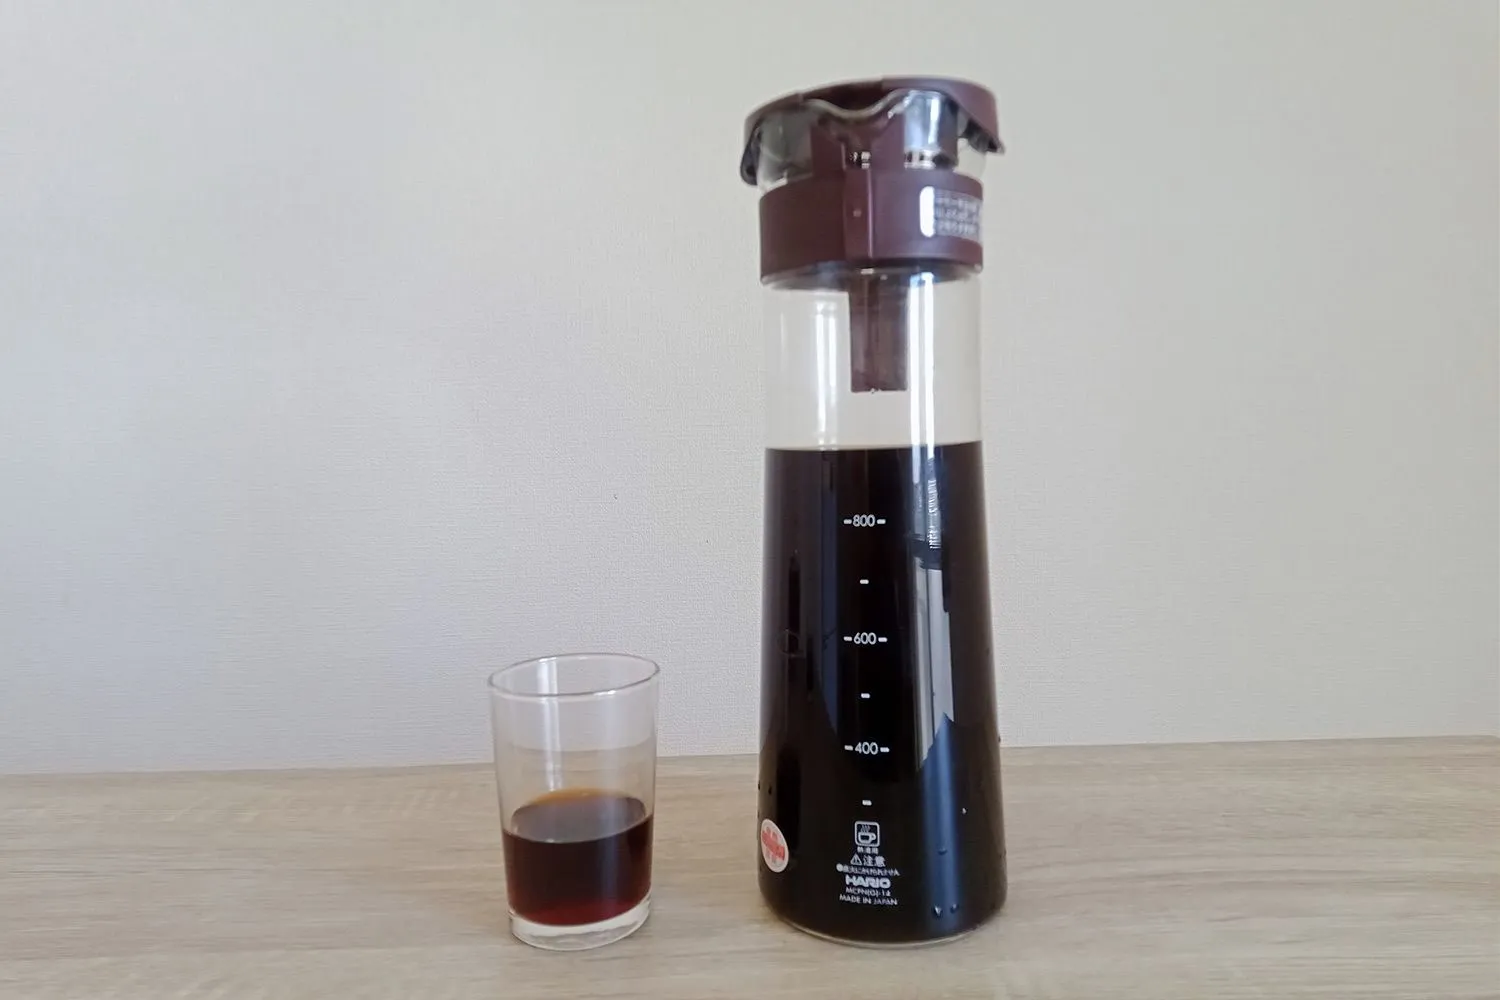 Hario Mizudashi Cold Brew Coffee Maker In-depth Review: A Poor Performer